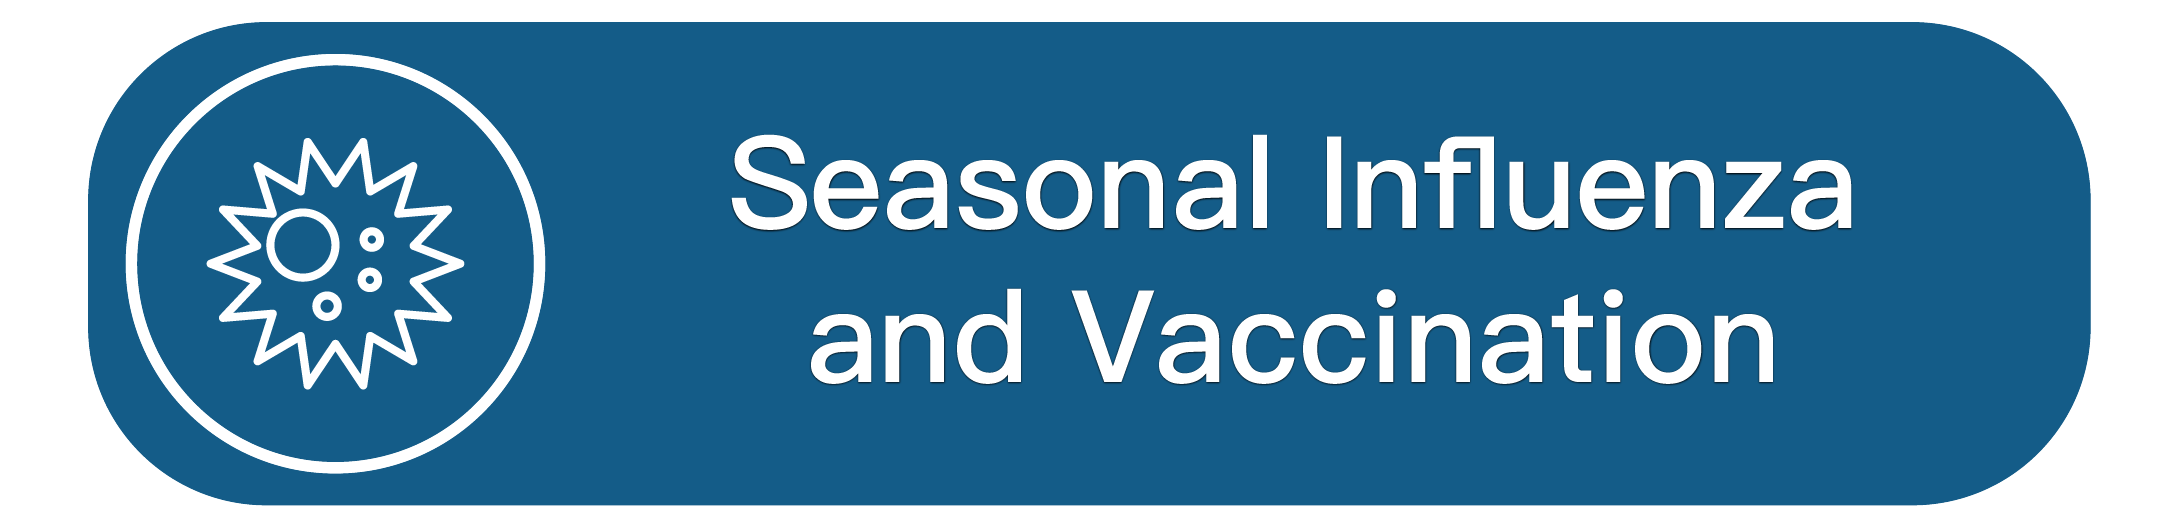 Seasonal Influenza and Vaccination